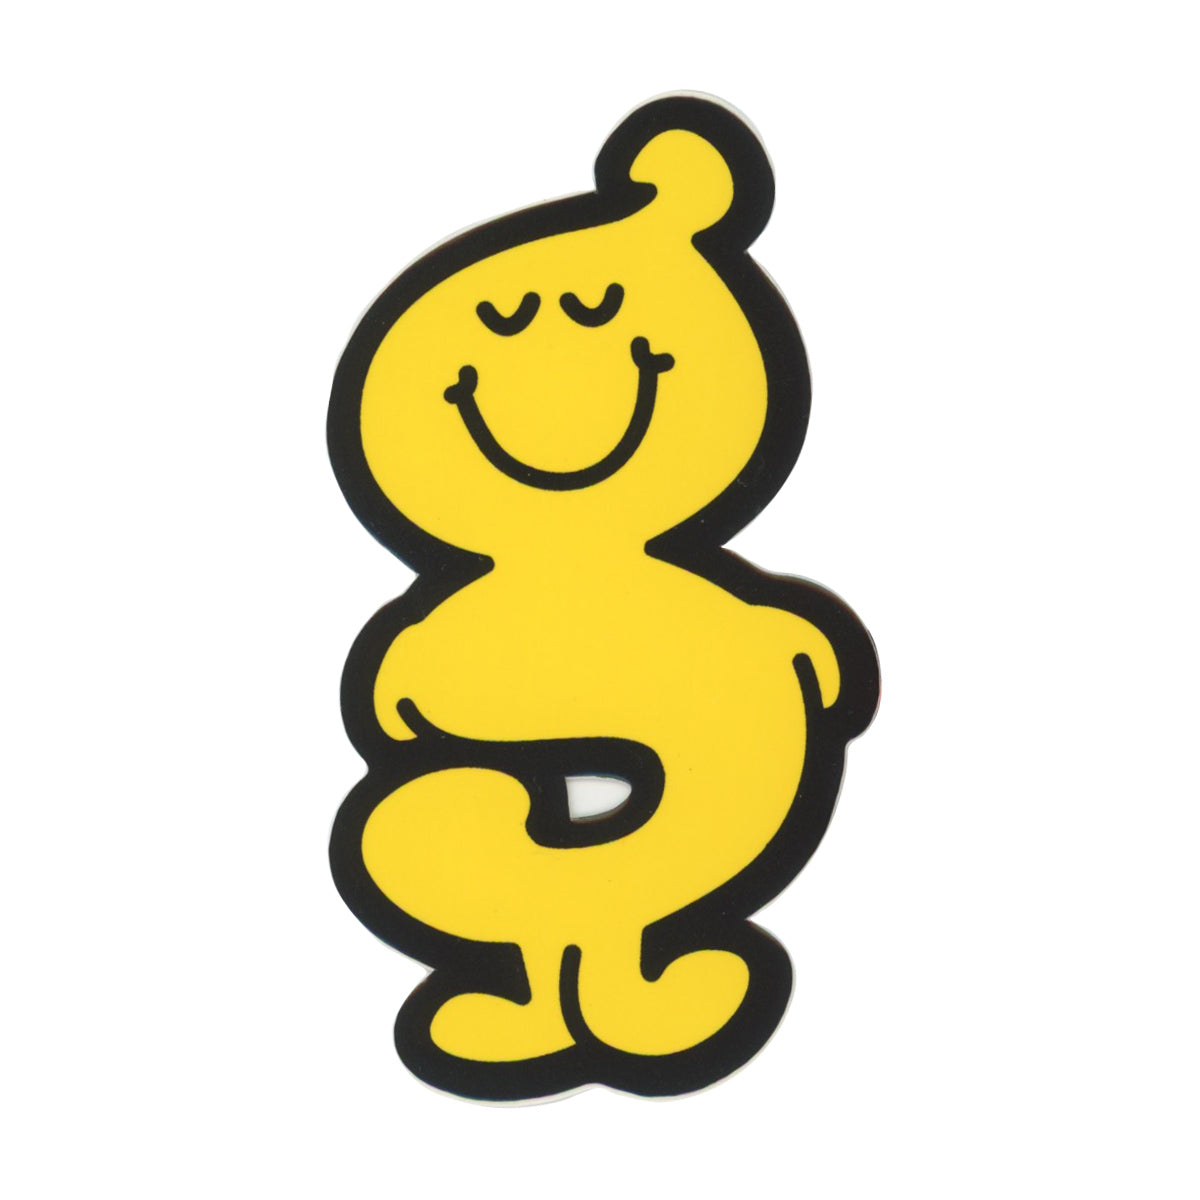 GOODENOUGH "G" Large Yellow Sticker